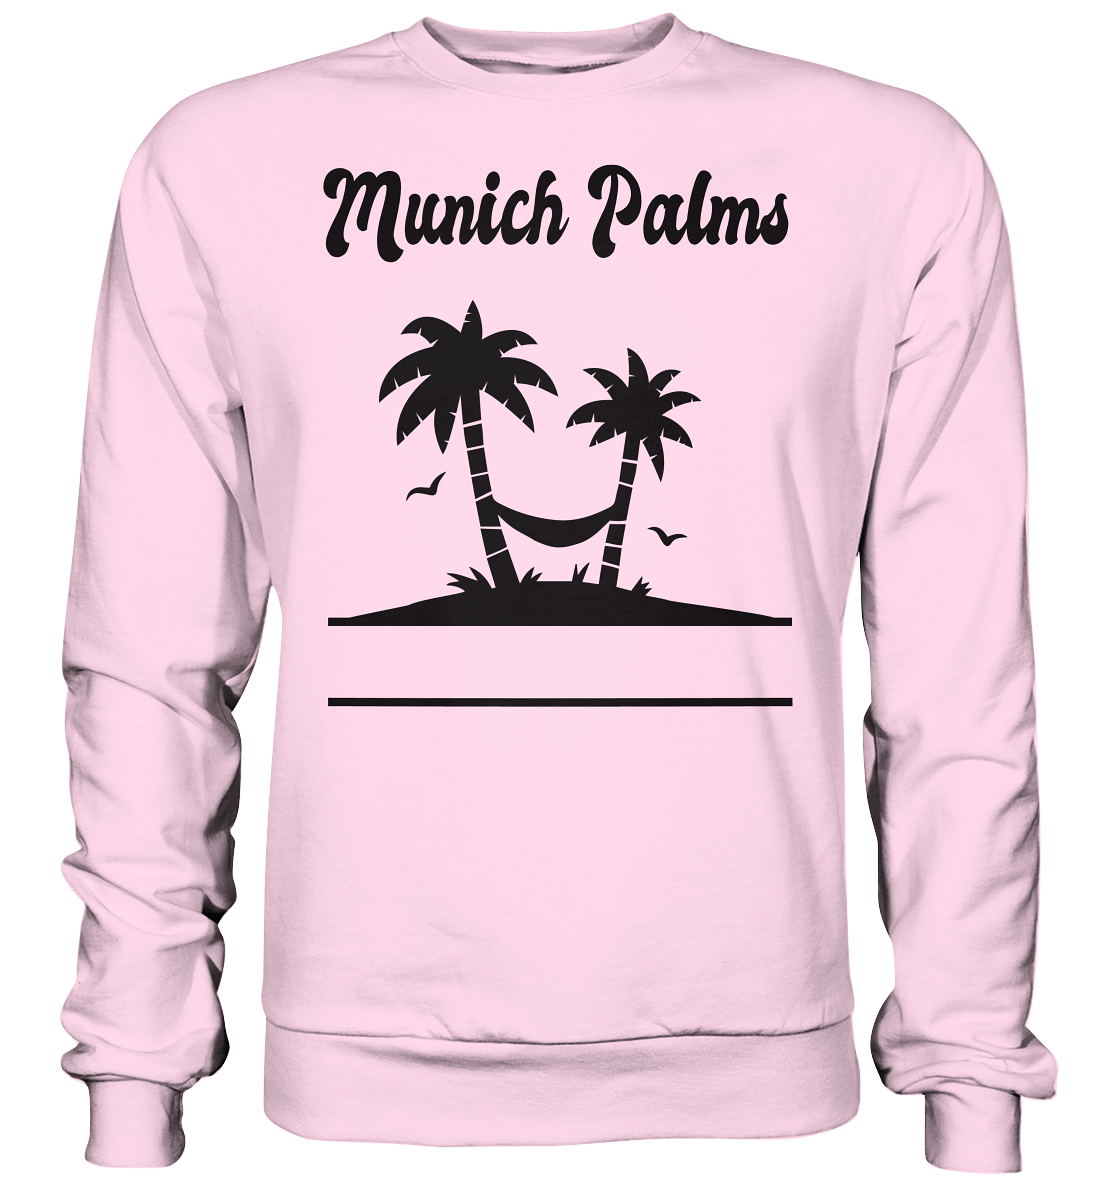 Design Munich Palms  - Basic Sweatshirt